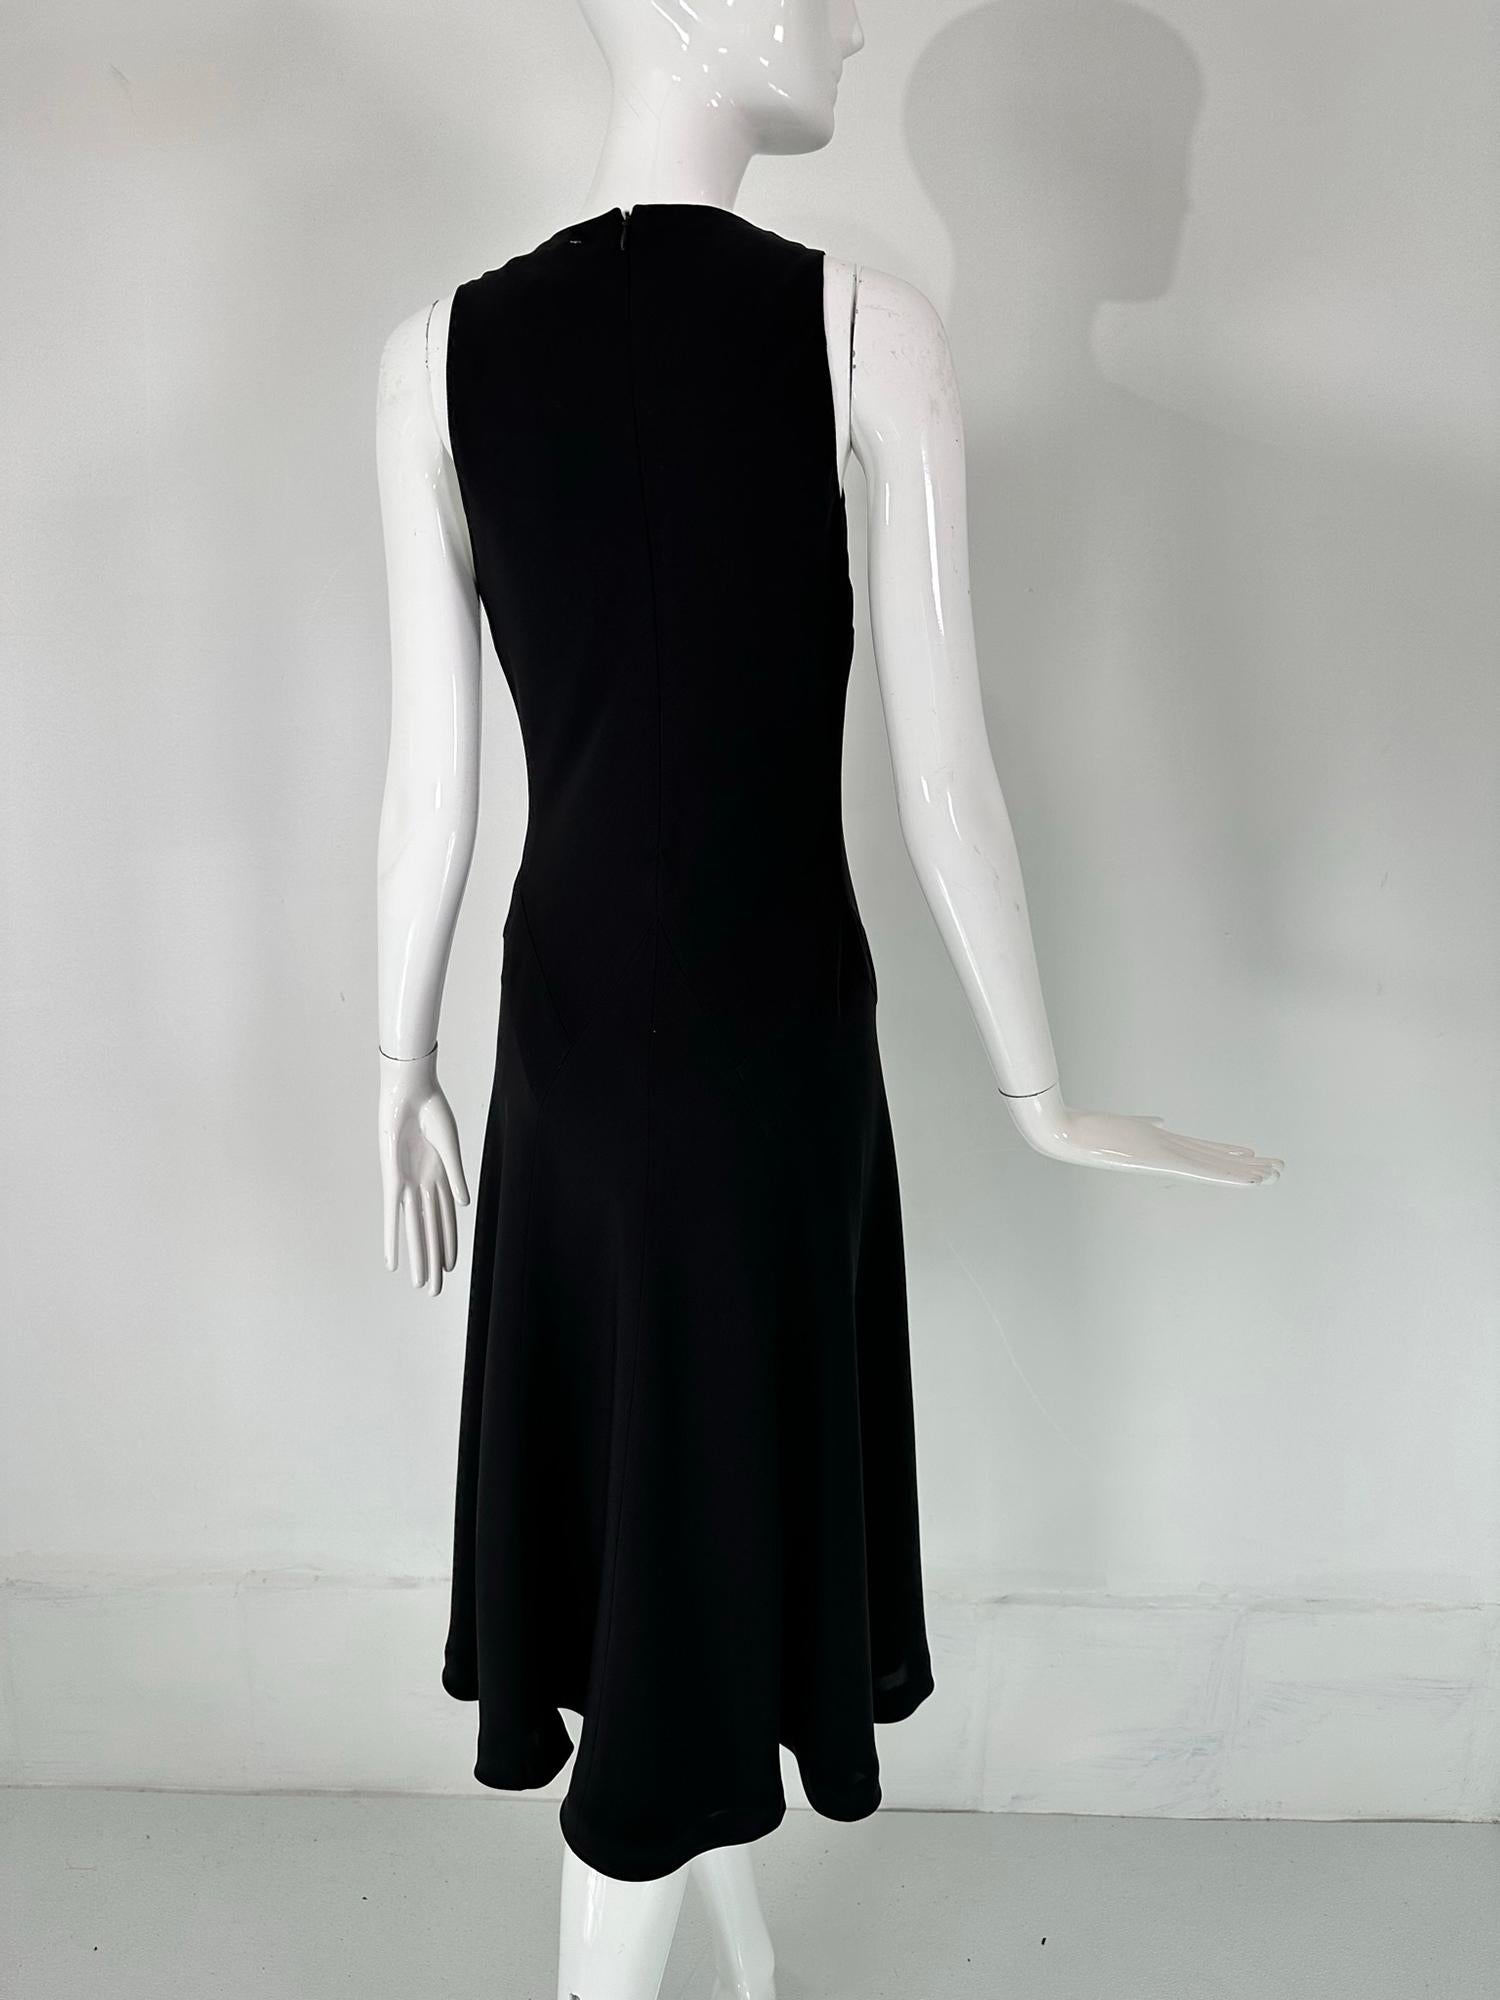 Ralph Lauren Black Label Classic Silk Bias Cut Dress 8 For Sale 2